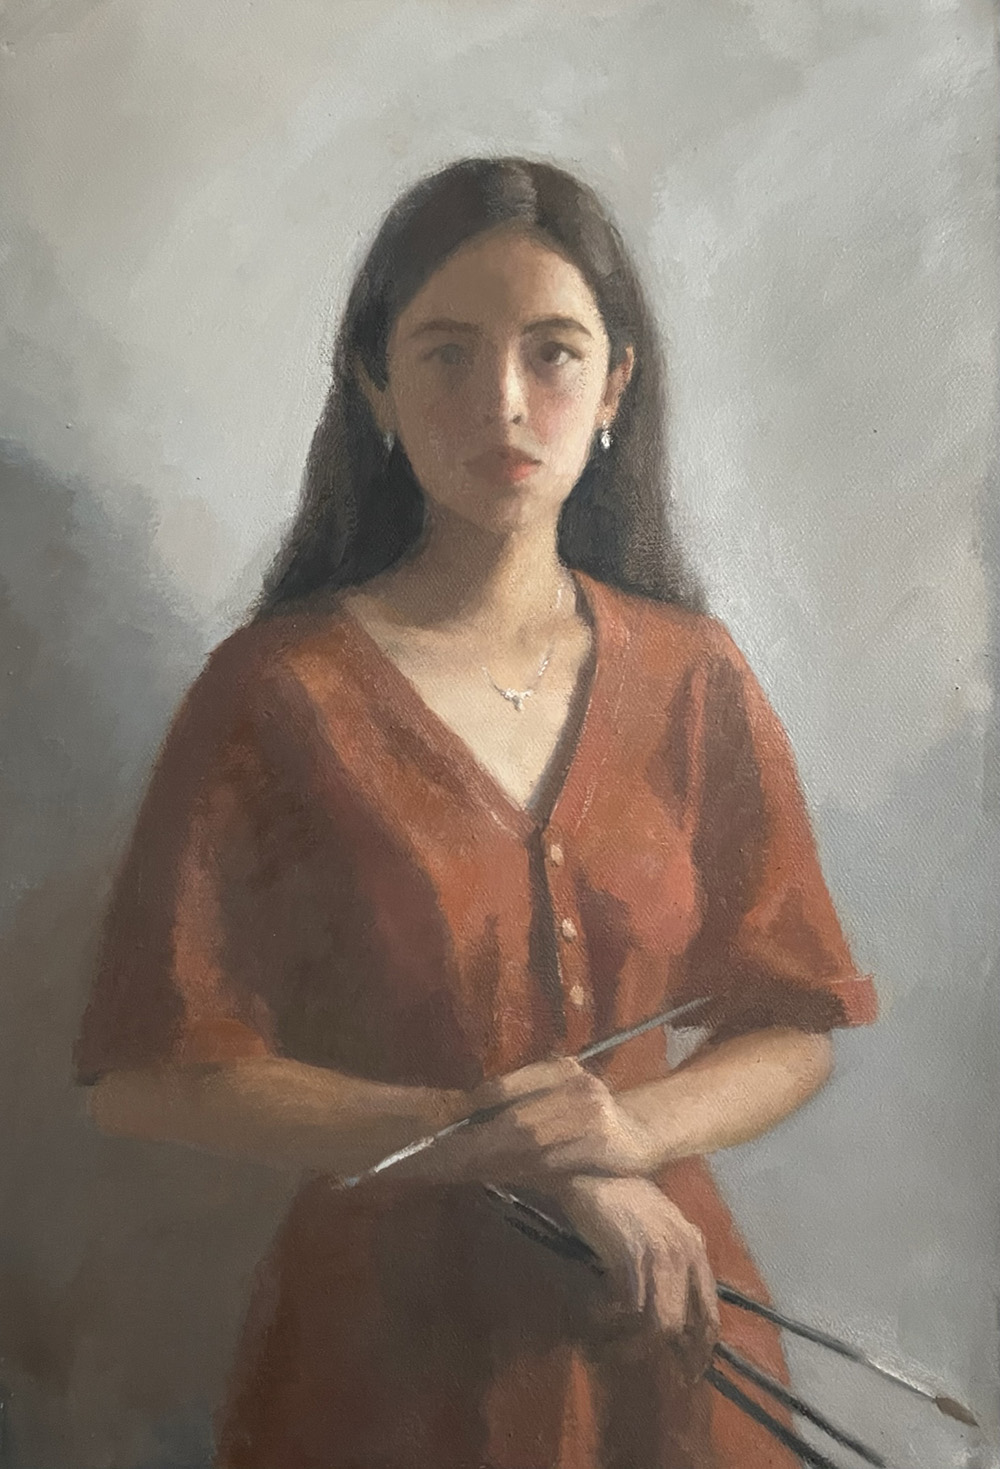 Painting Self-Portrait Sandra Brand